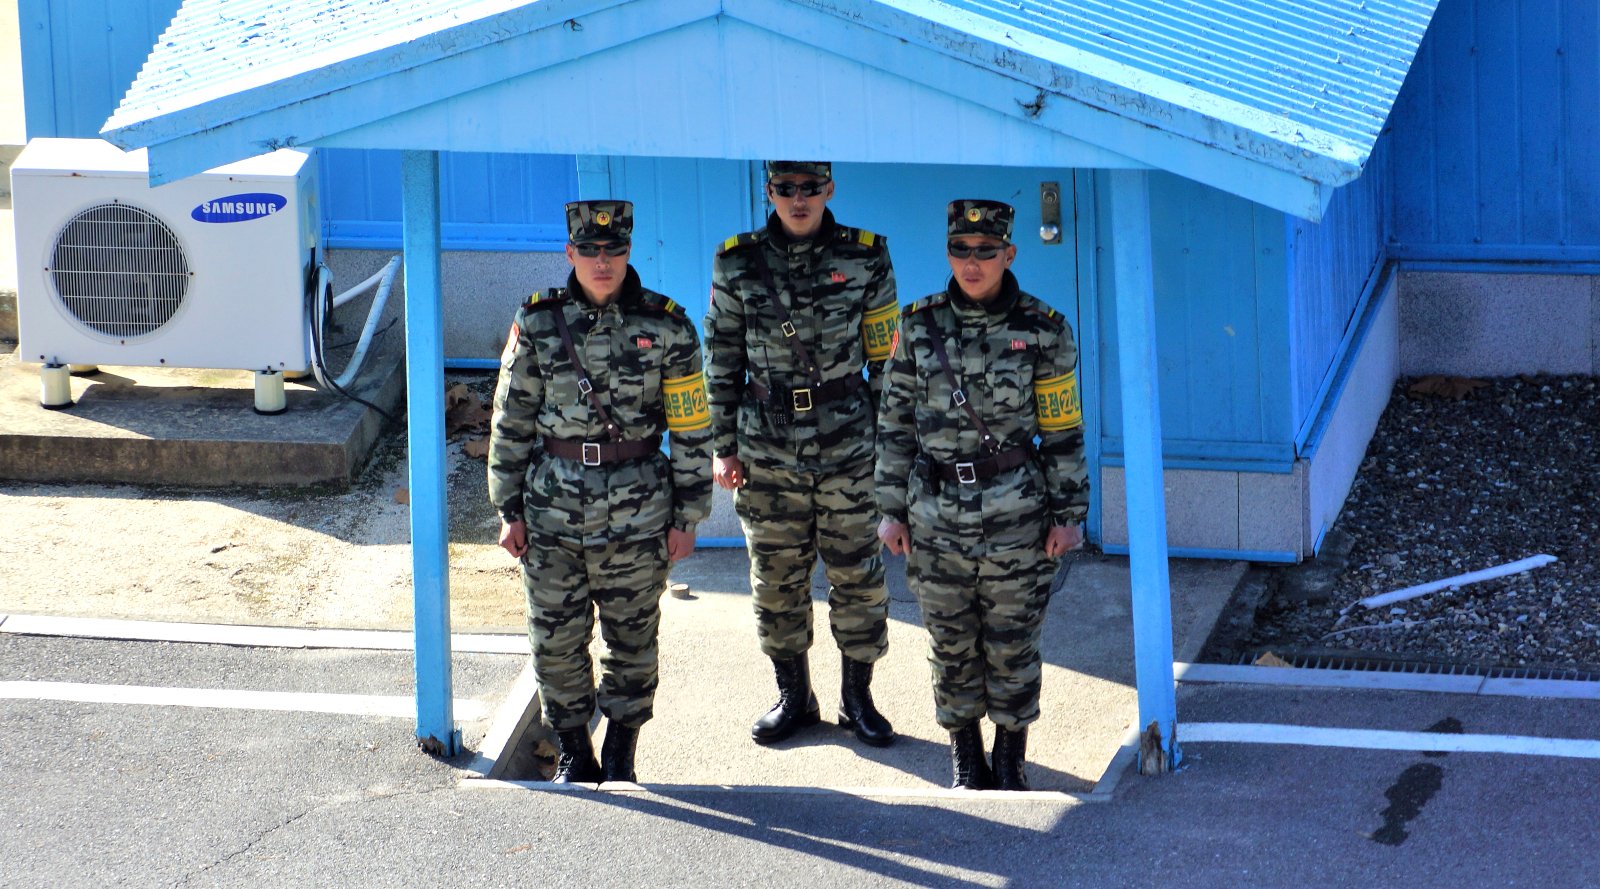 north korean guards